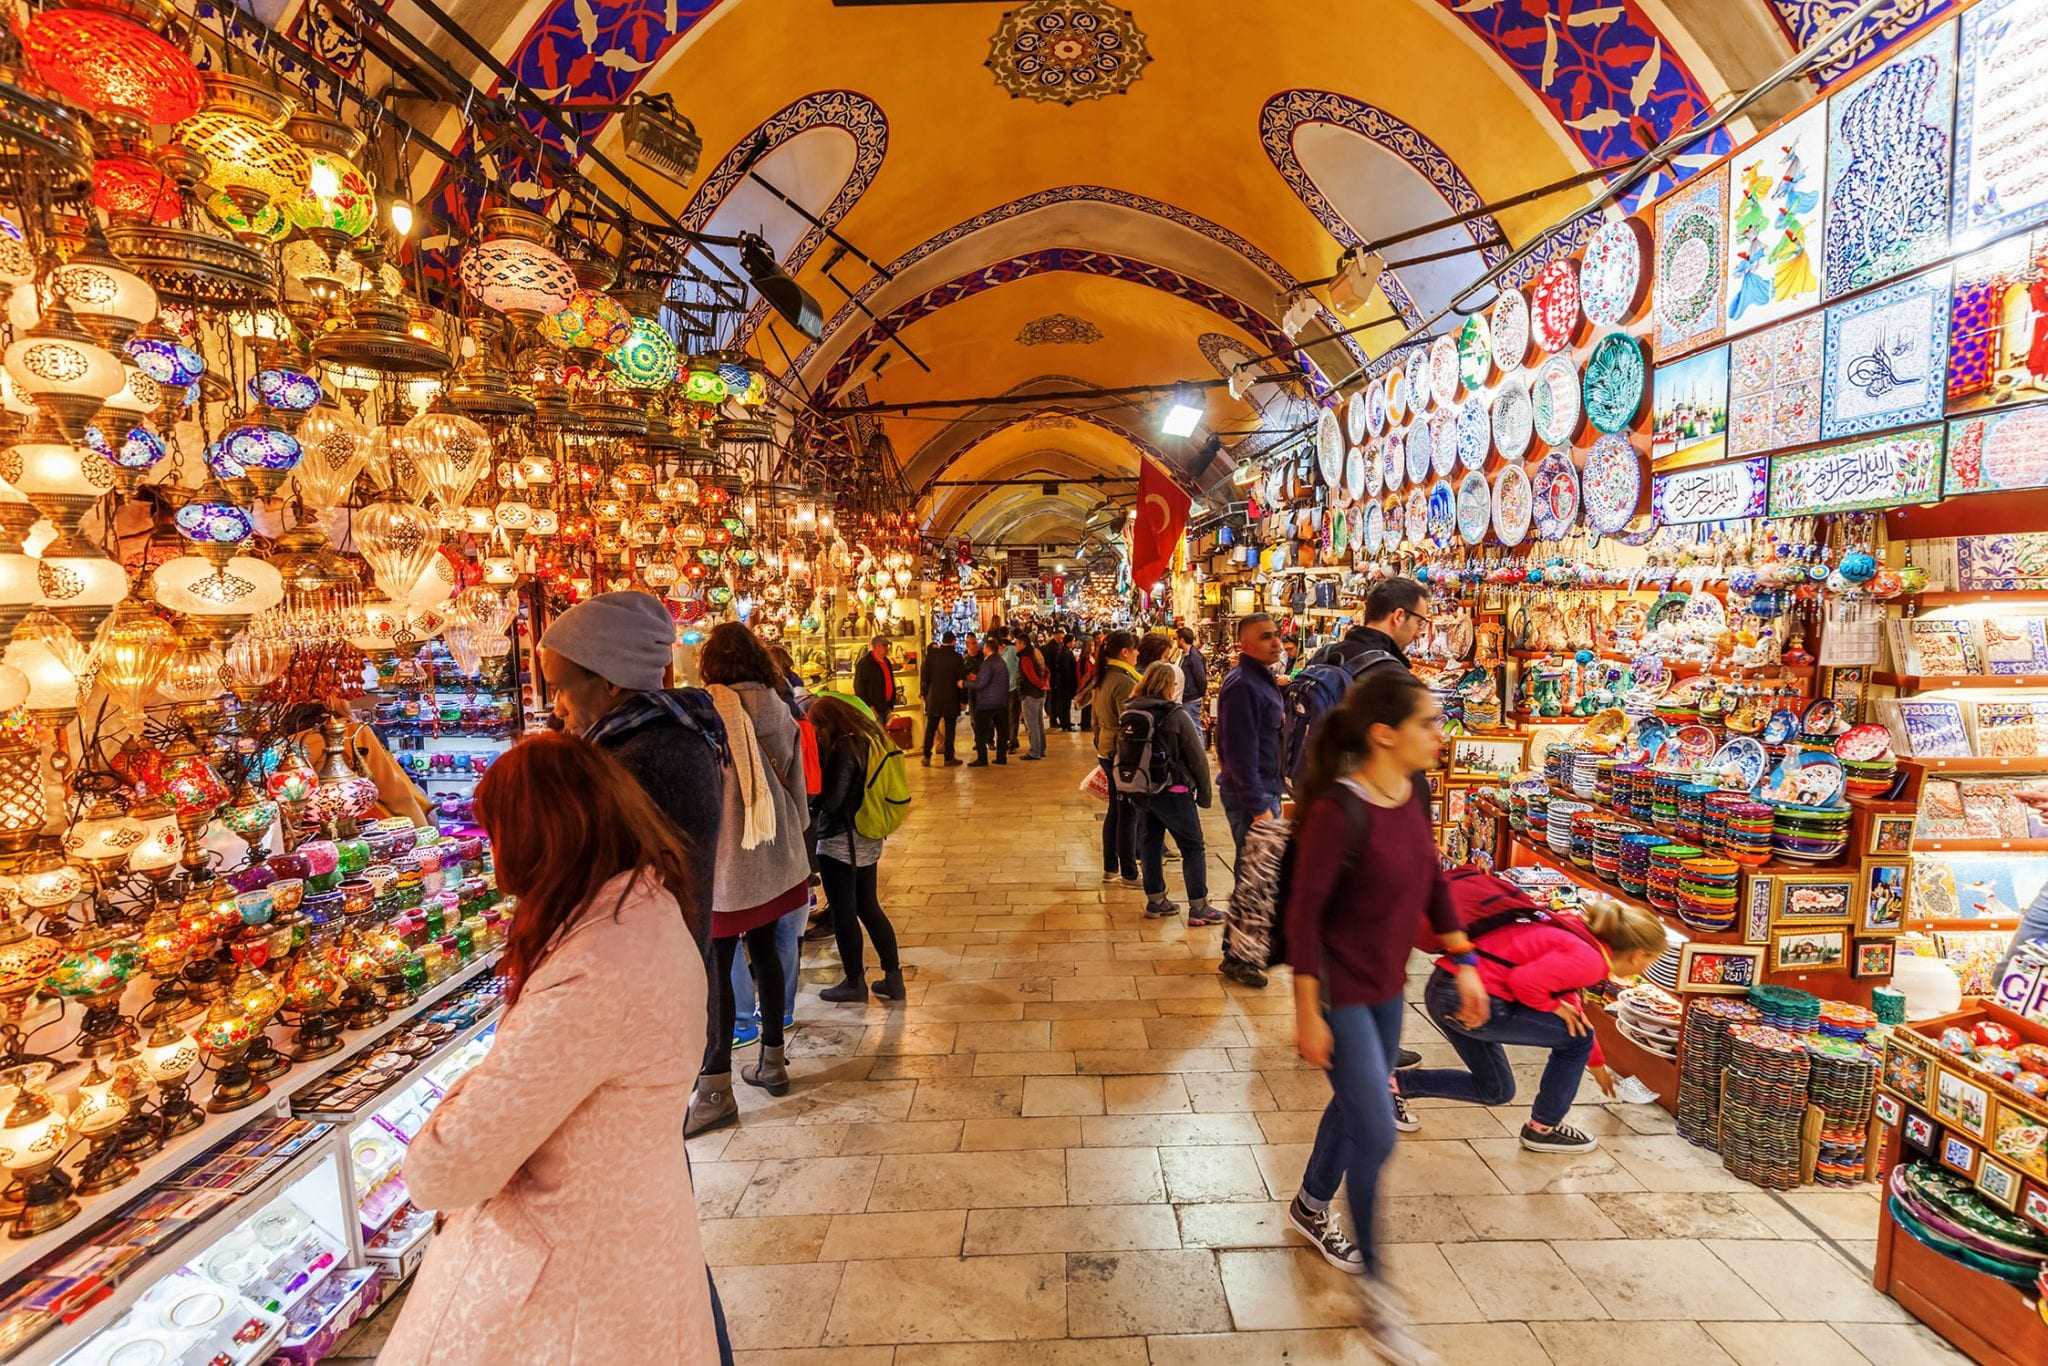 Гранд базар или лучший туристический аттракцион в стамбуле | living in travels